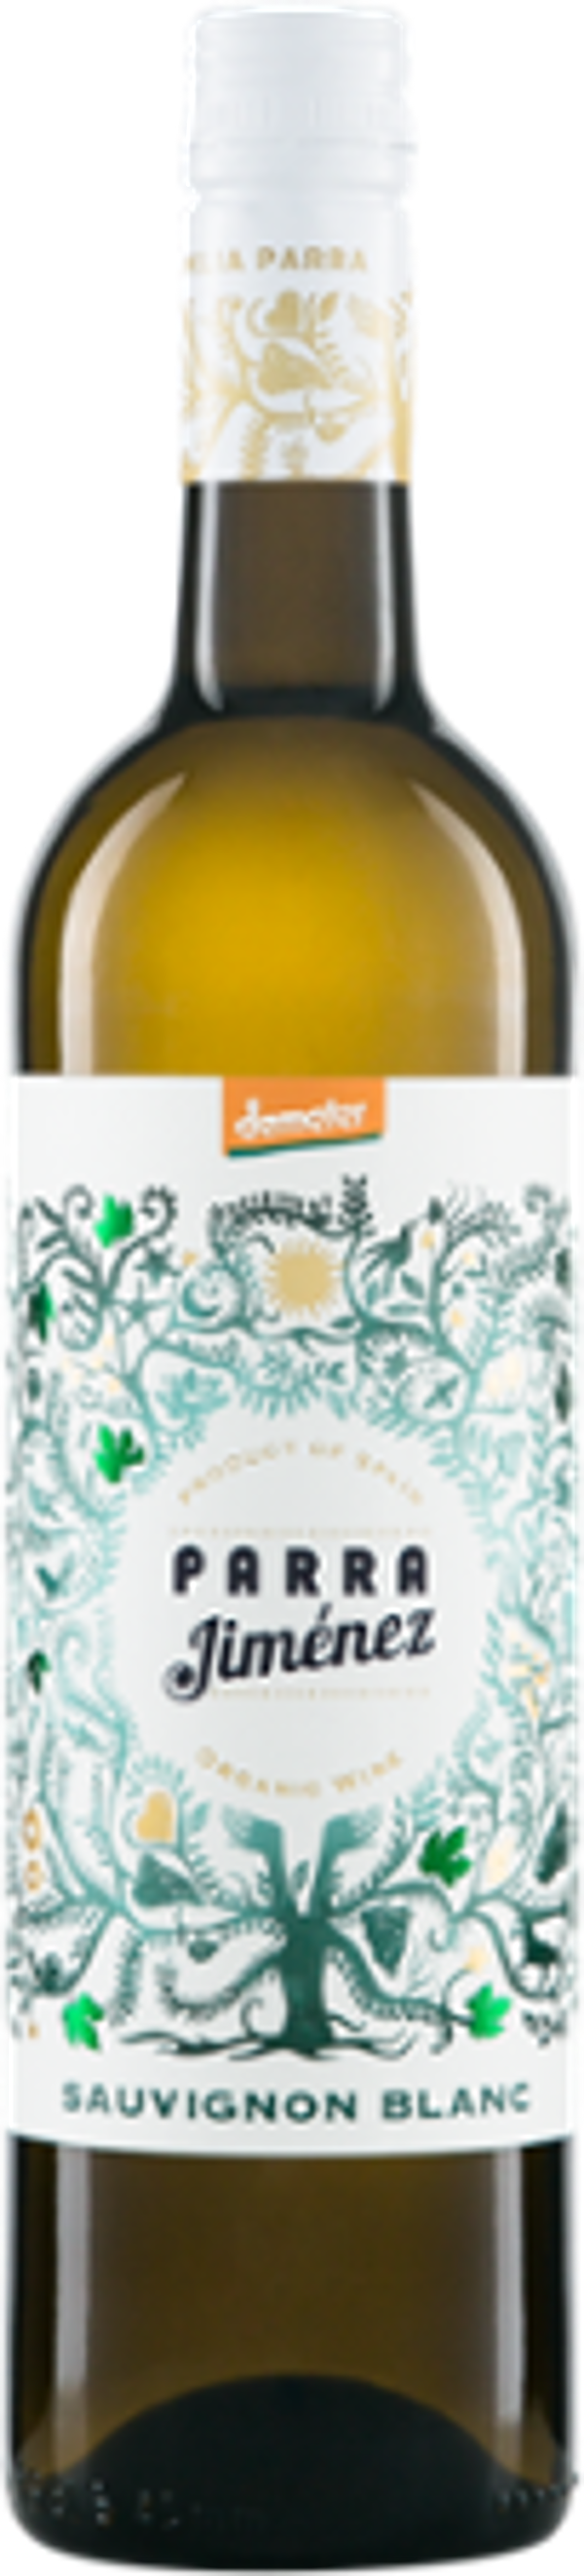 Produktfoto zu Sauvignon Blanc PARRA 2022 Fam